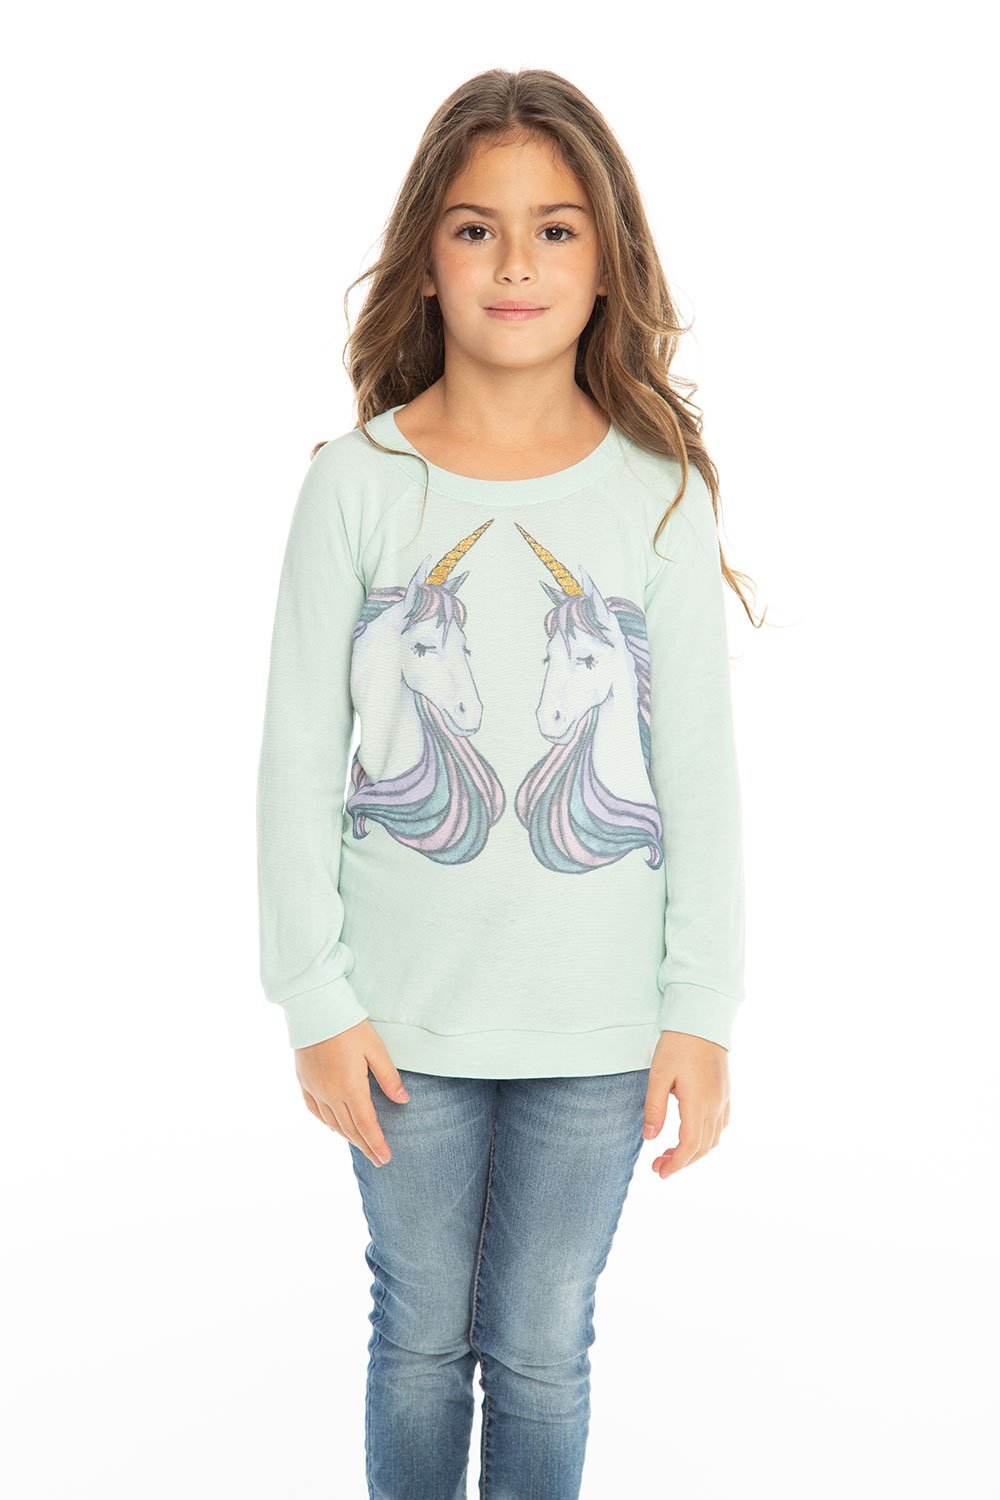 Chaser Girls Cozy Knit Raglan Pullover - Unicorn Dreams (Size 14)